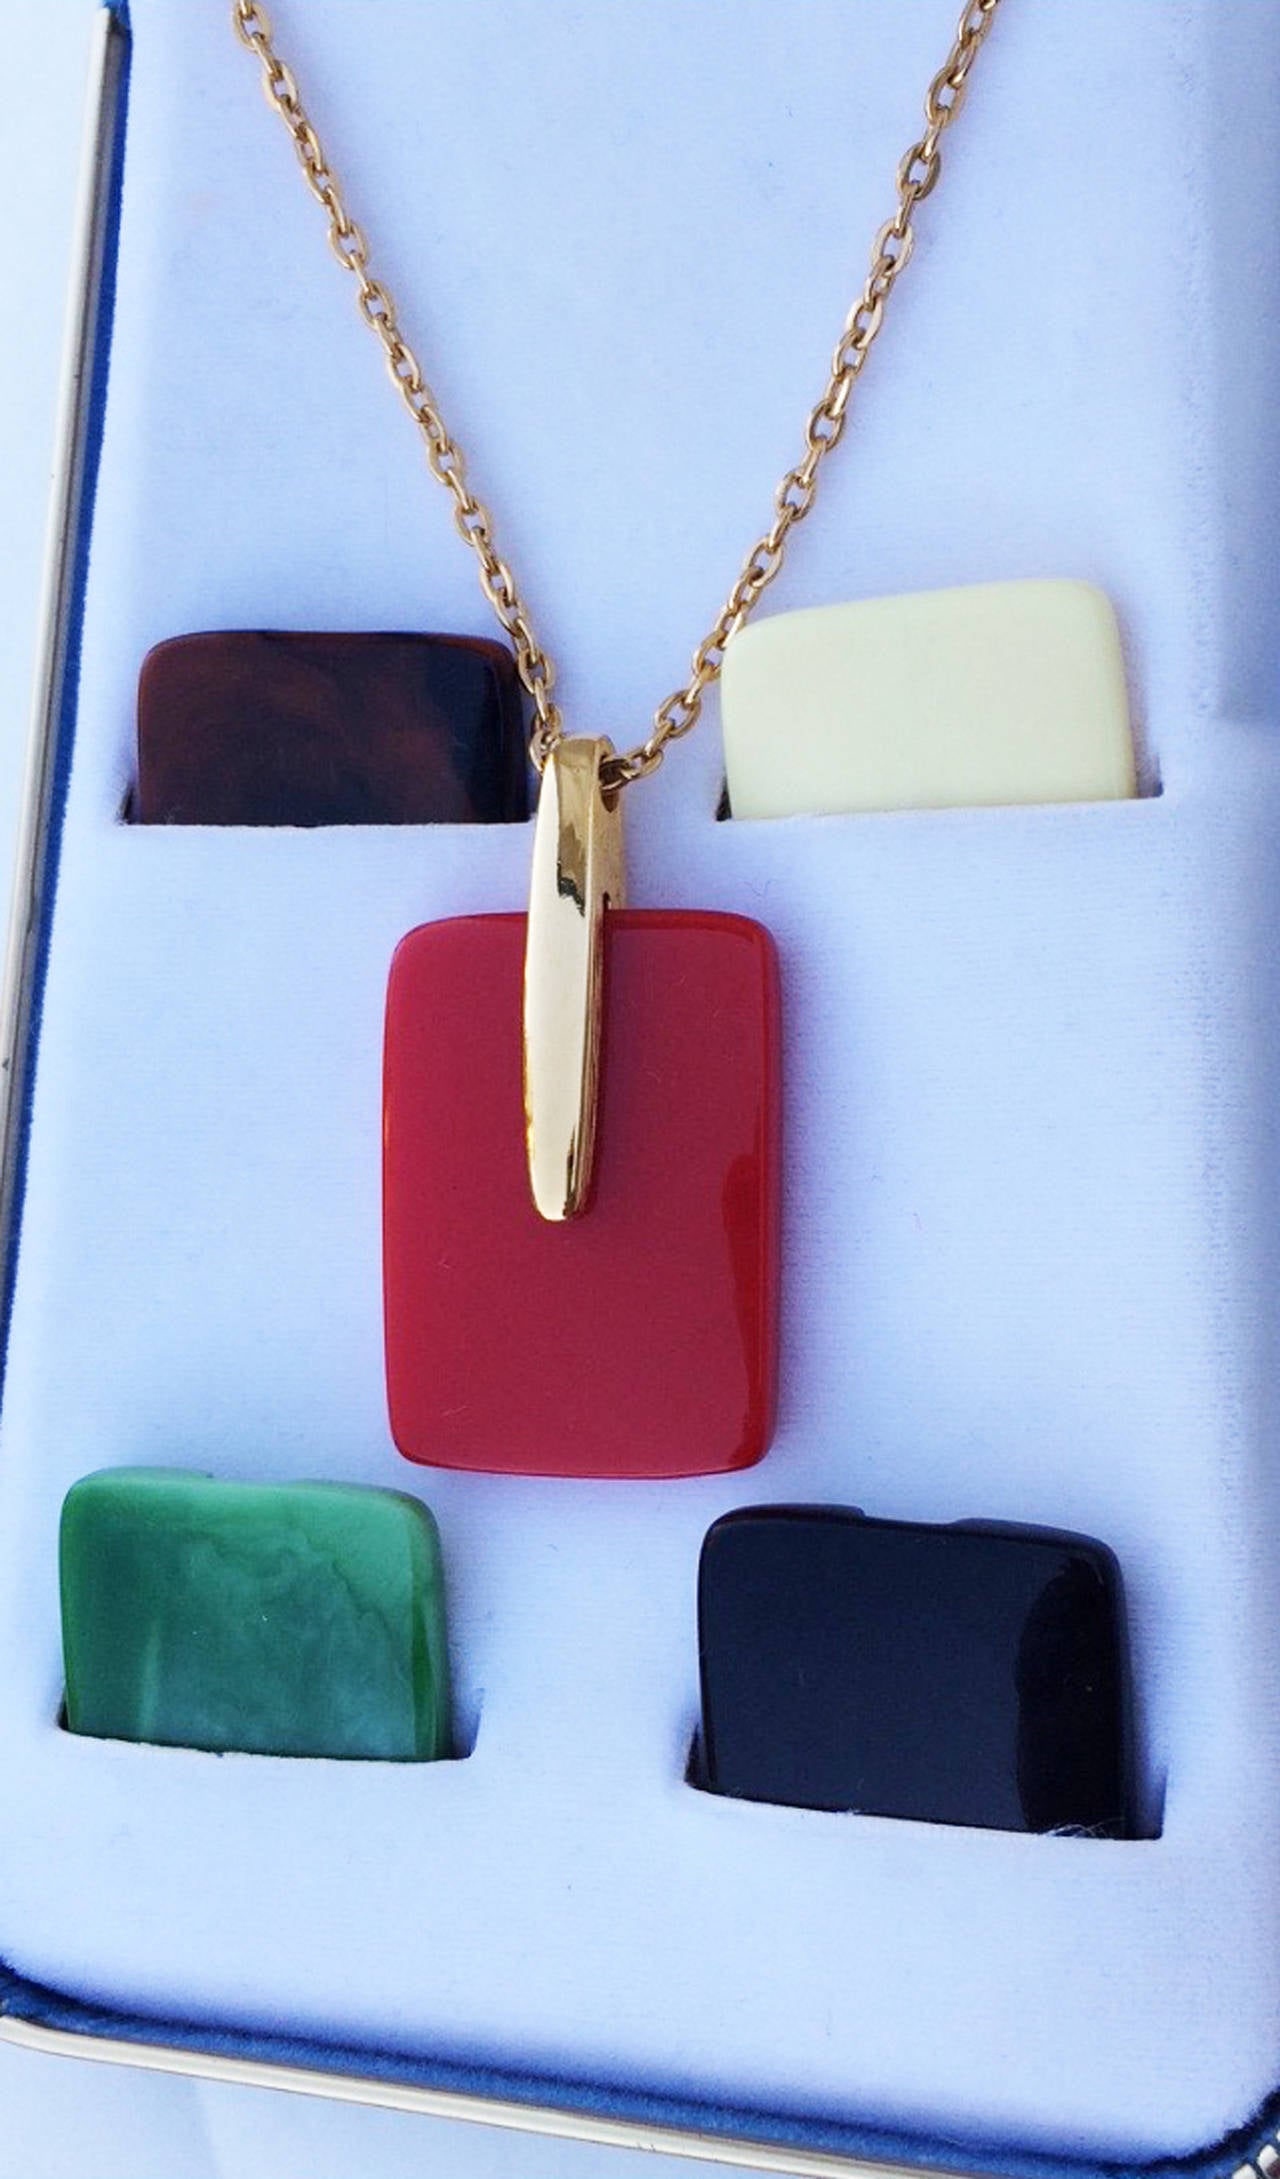 A fine and rare vintage Trifari Lucite pendant necklace box set. Authentic signed gilt metal item features five inter-changeable and secure-locking Lucite pendants. Unworn item retains original signature box. Pristine.